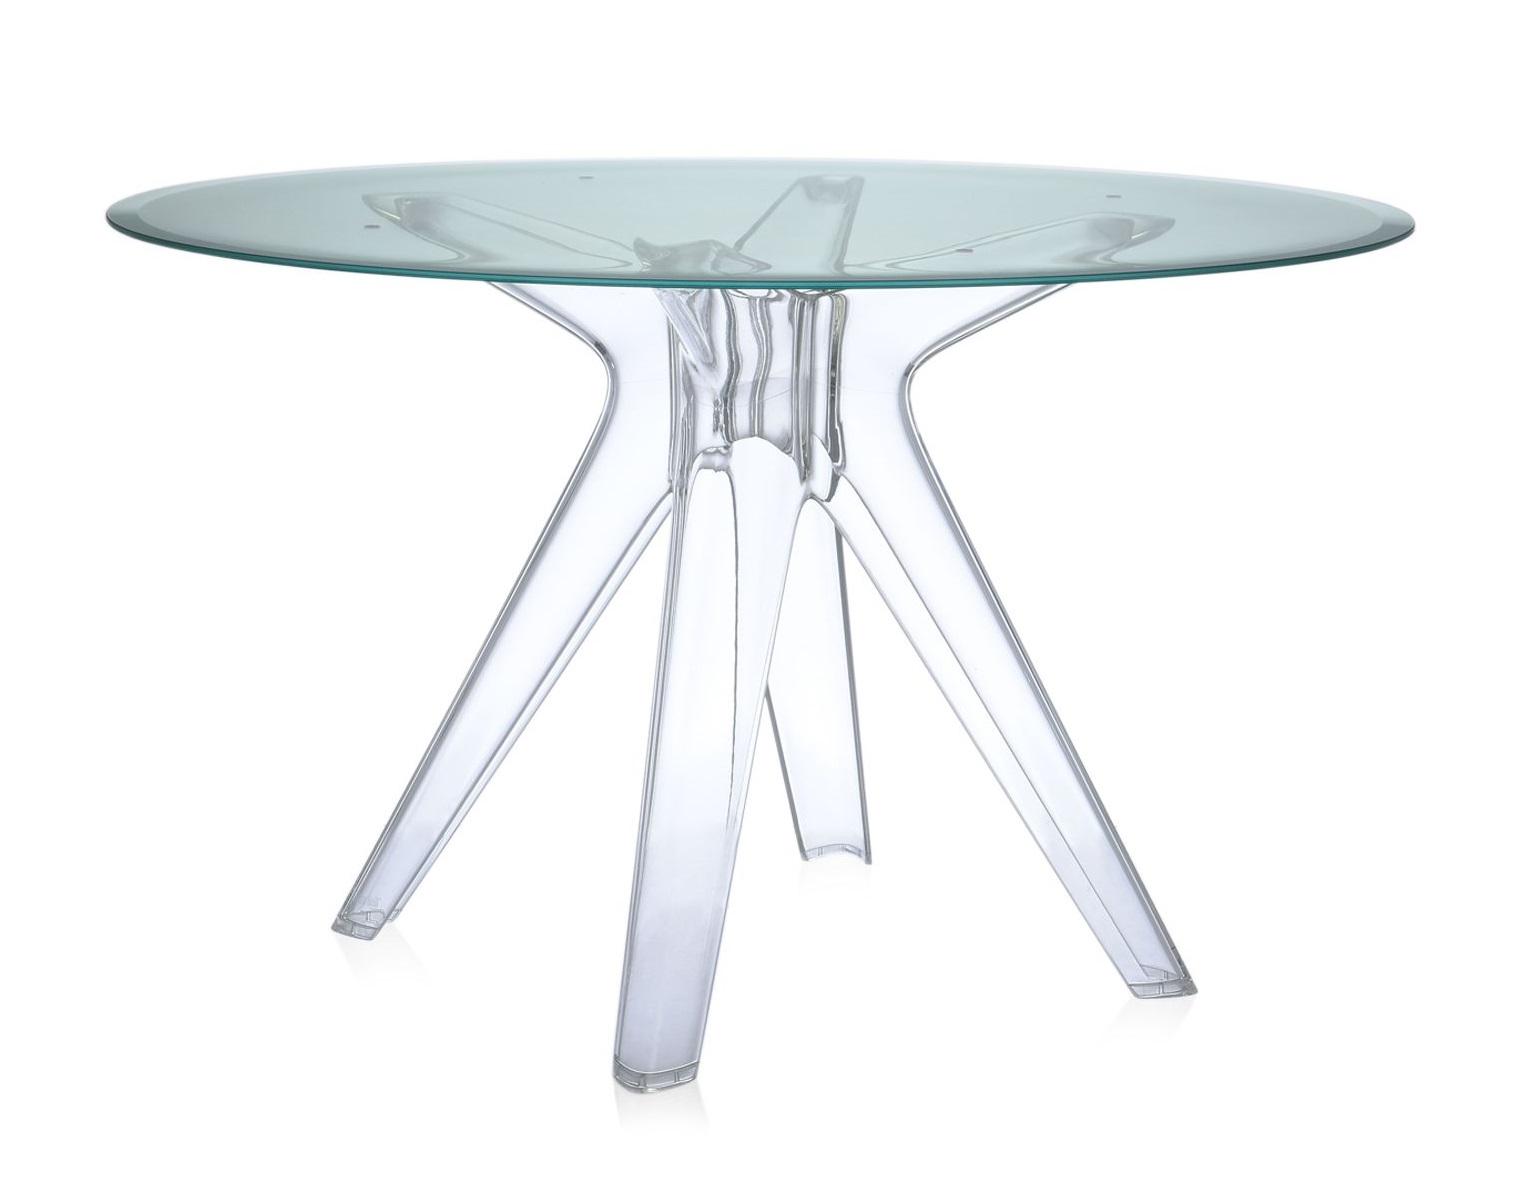 Masa Kartell Sir Gio design Philippe Starck diametru 120cm verde – transparent Kartell